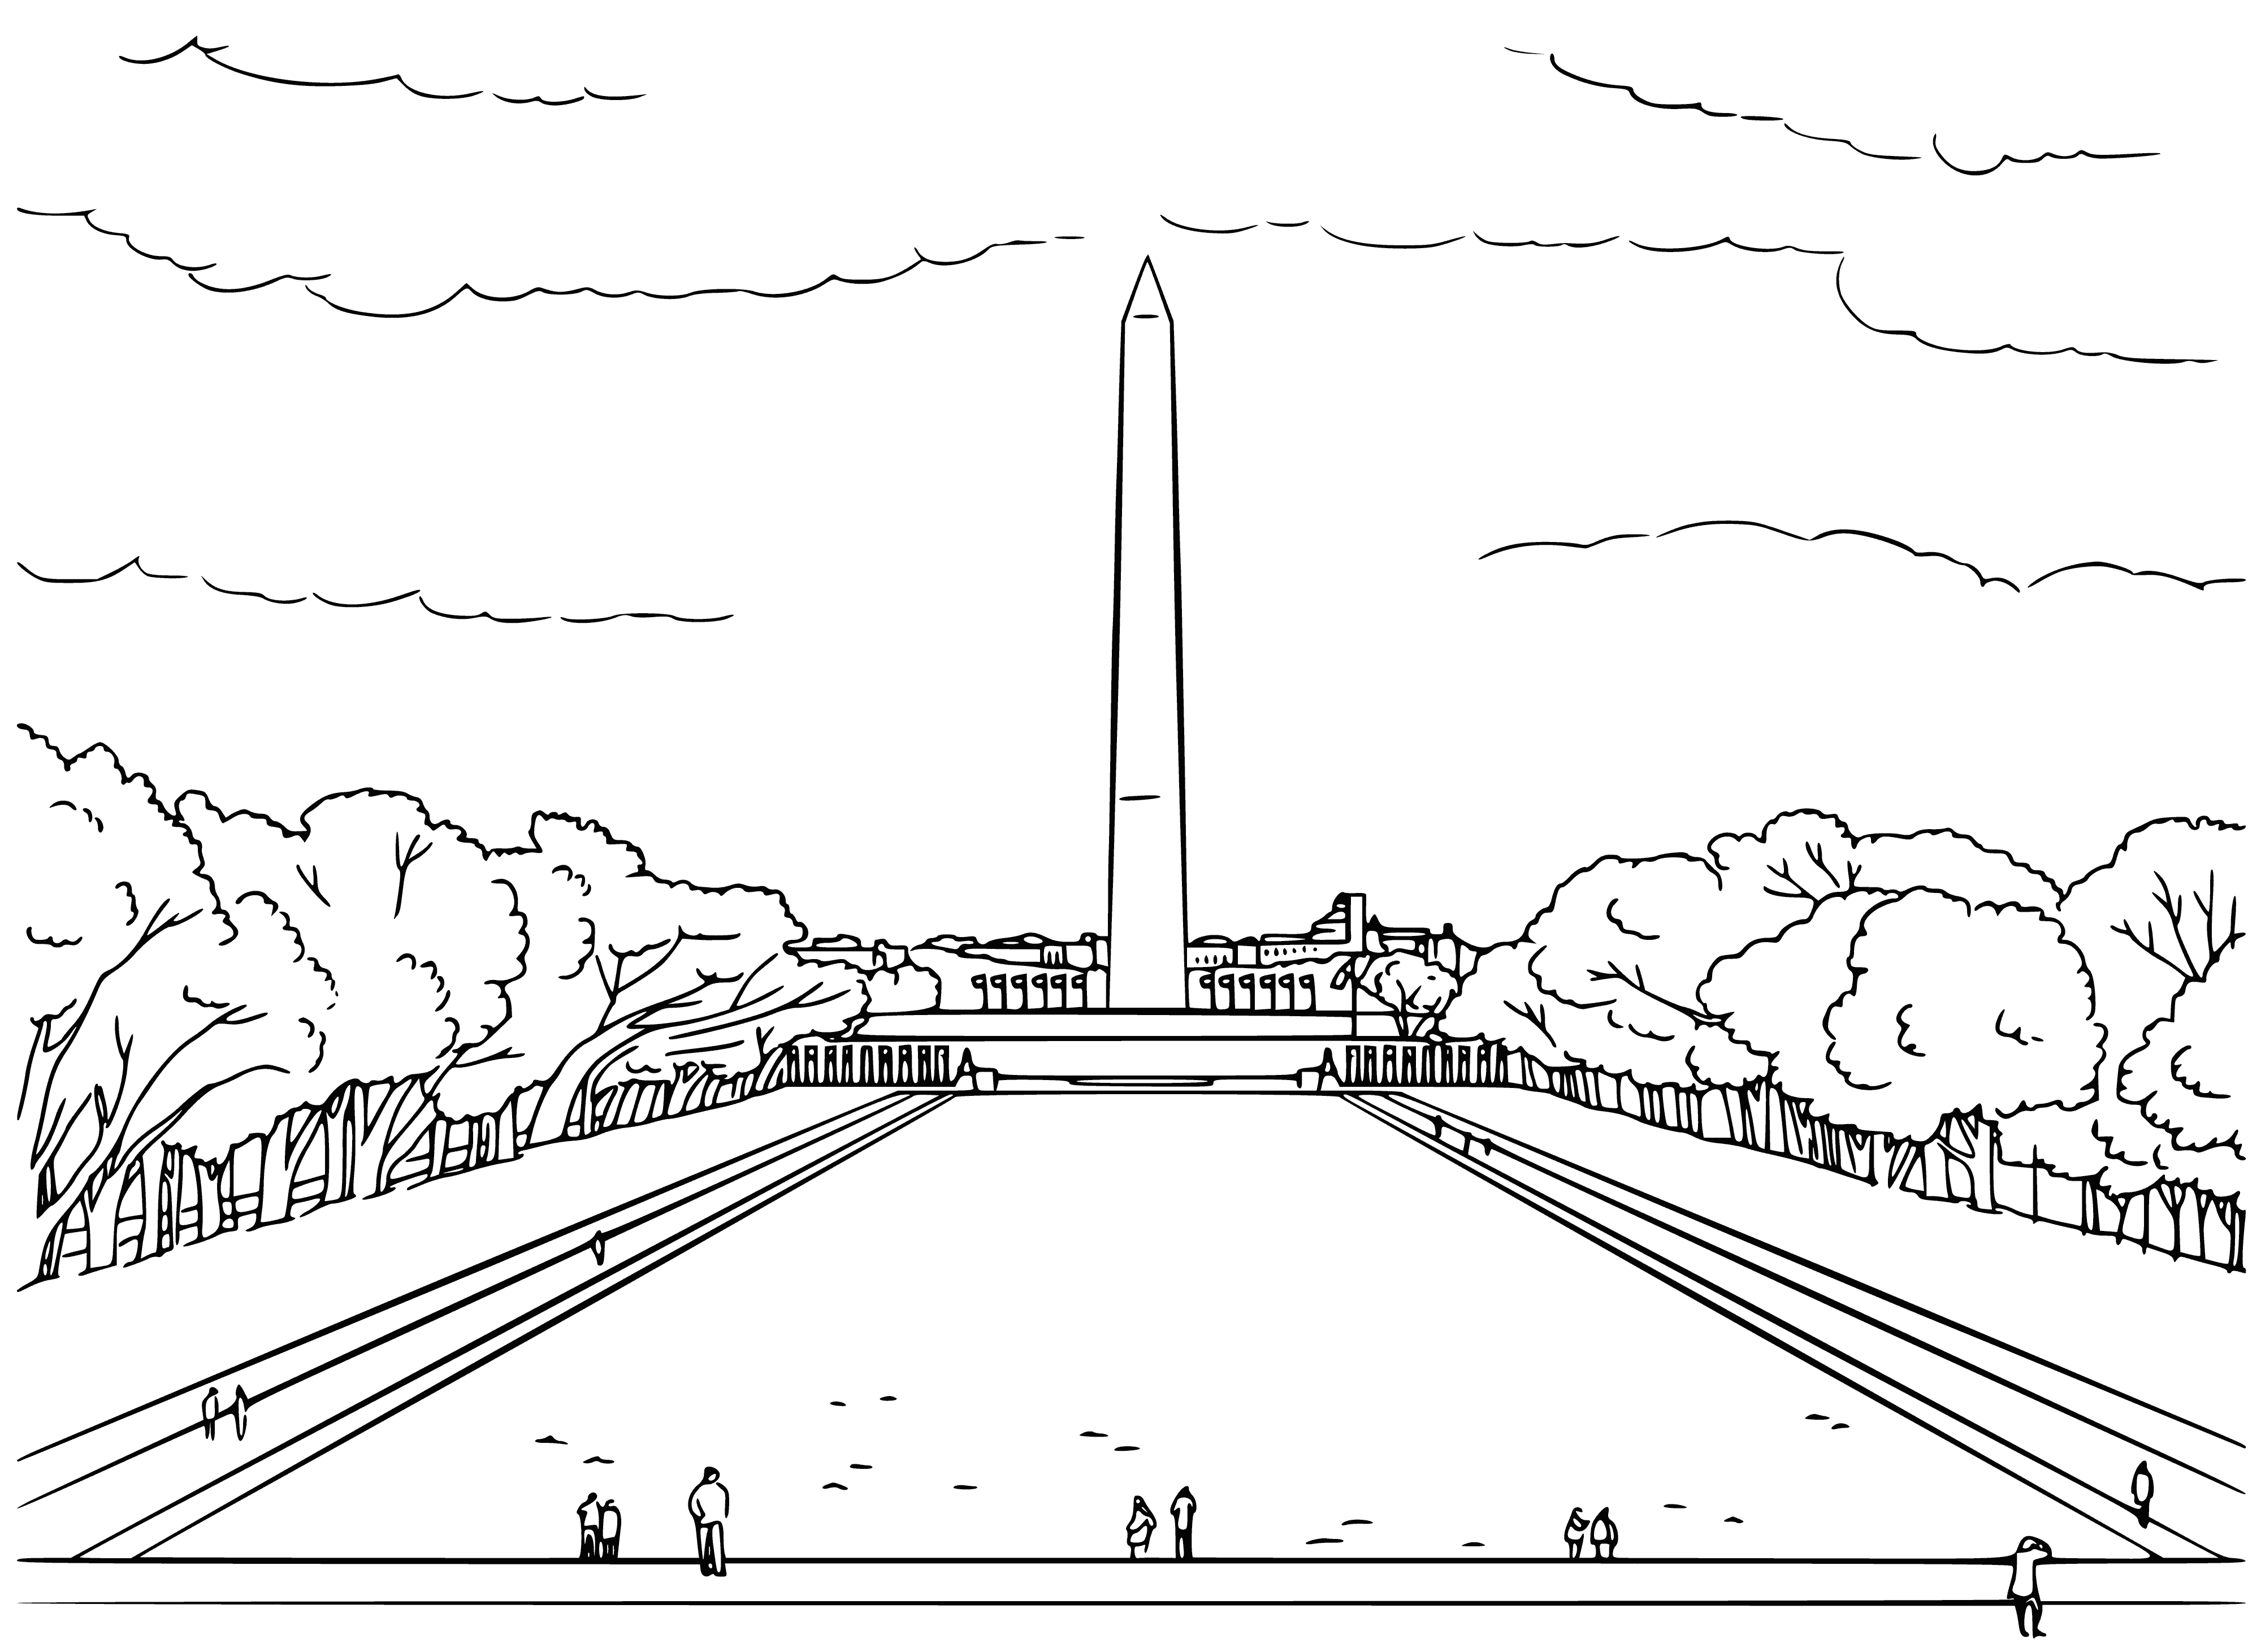 Washington Monument. USA coloring page